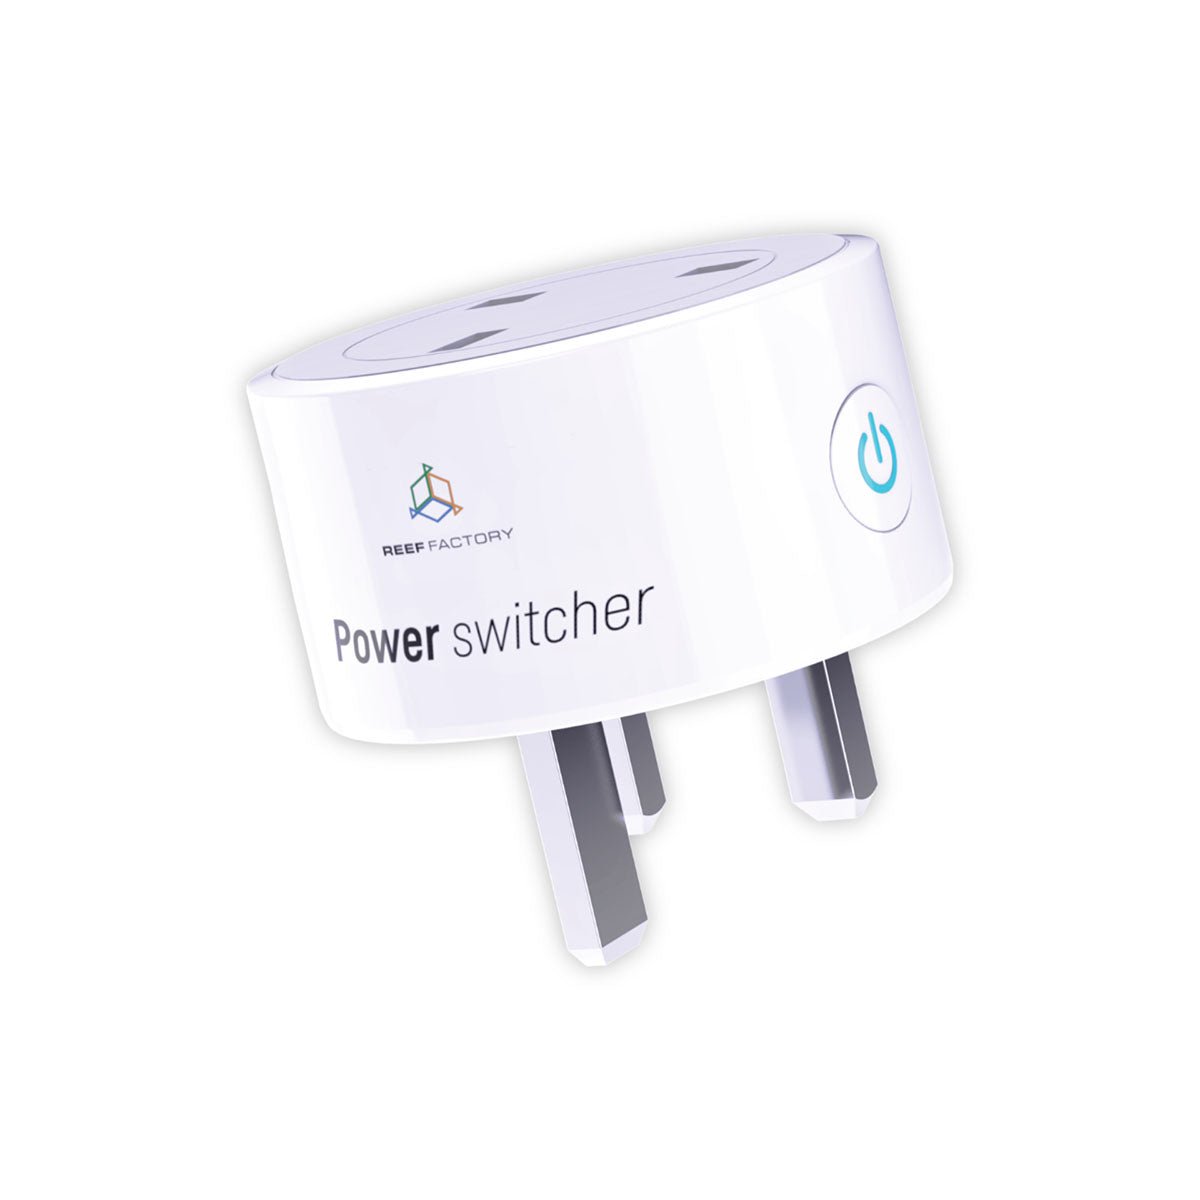 Reef Factory Power Switcher - Charterhouse Aquatics